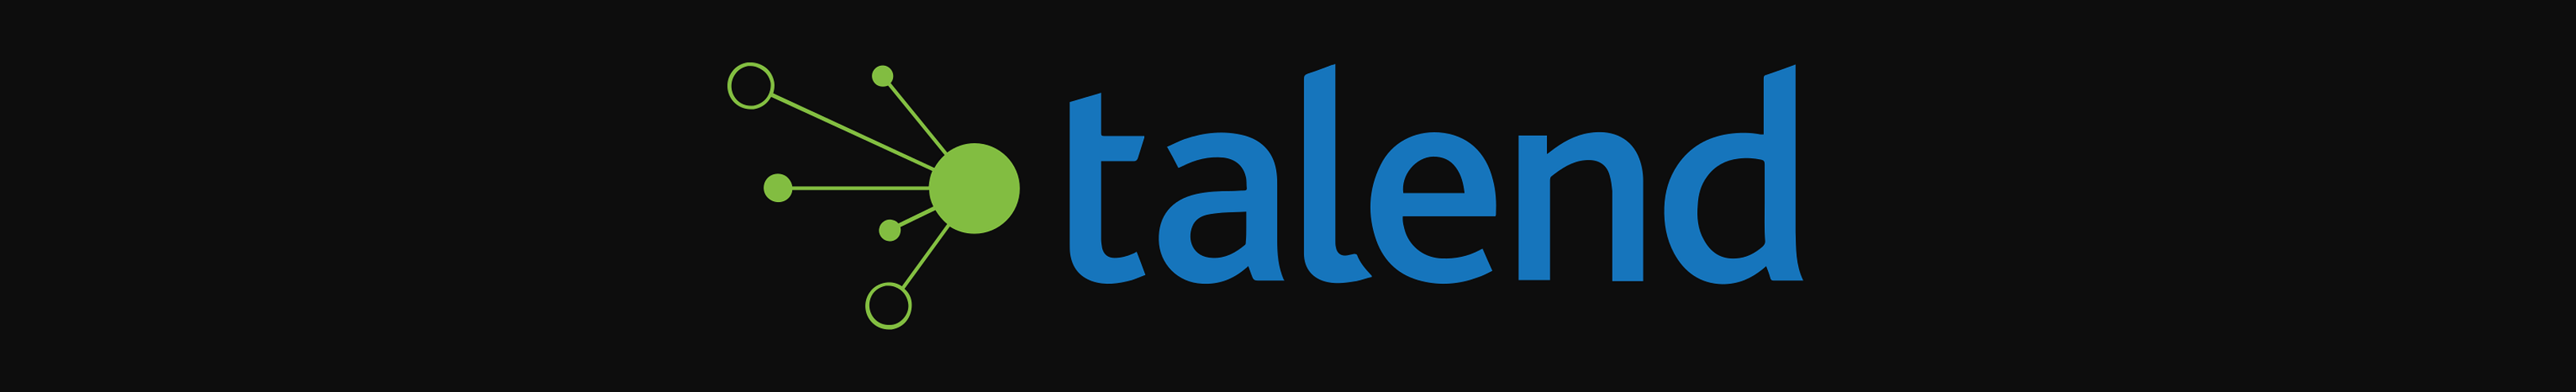 Talend Logo - Top 10 Data Analytics Tools - Edureka